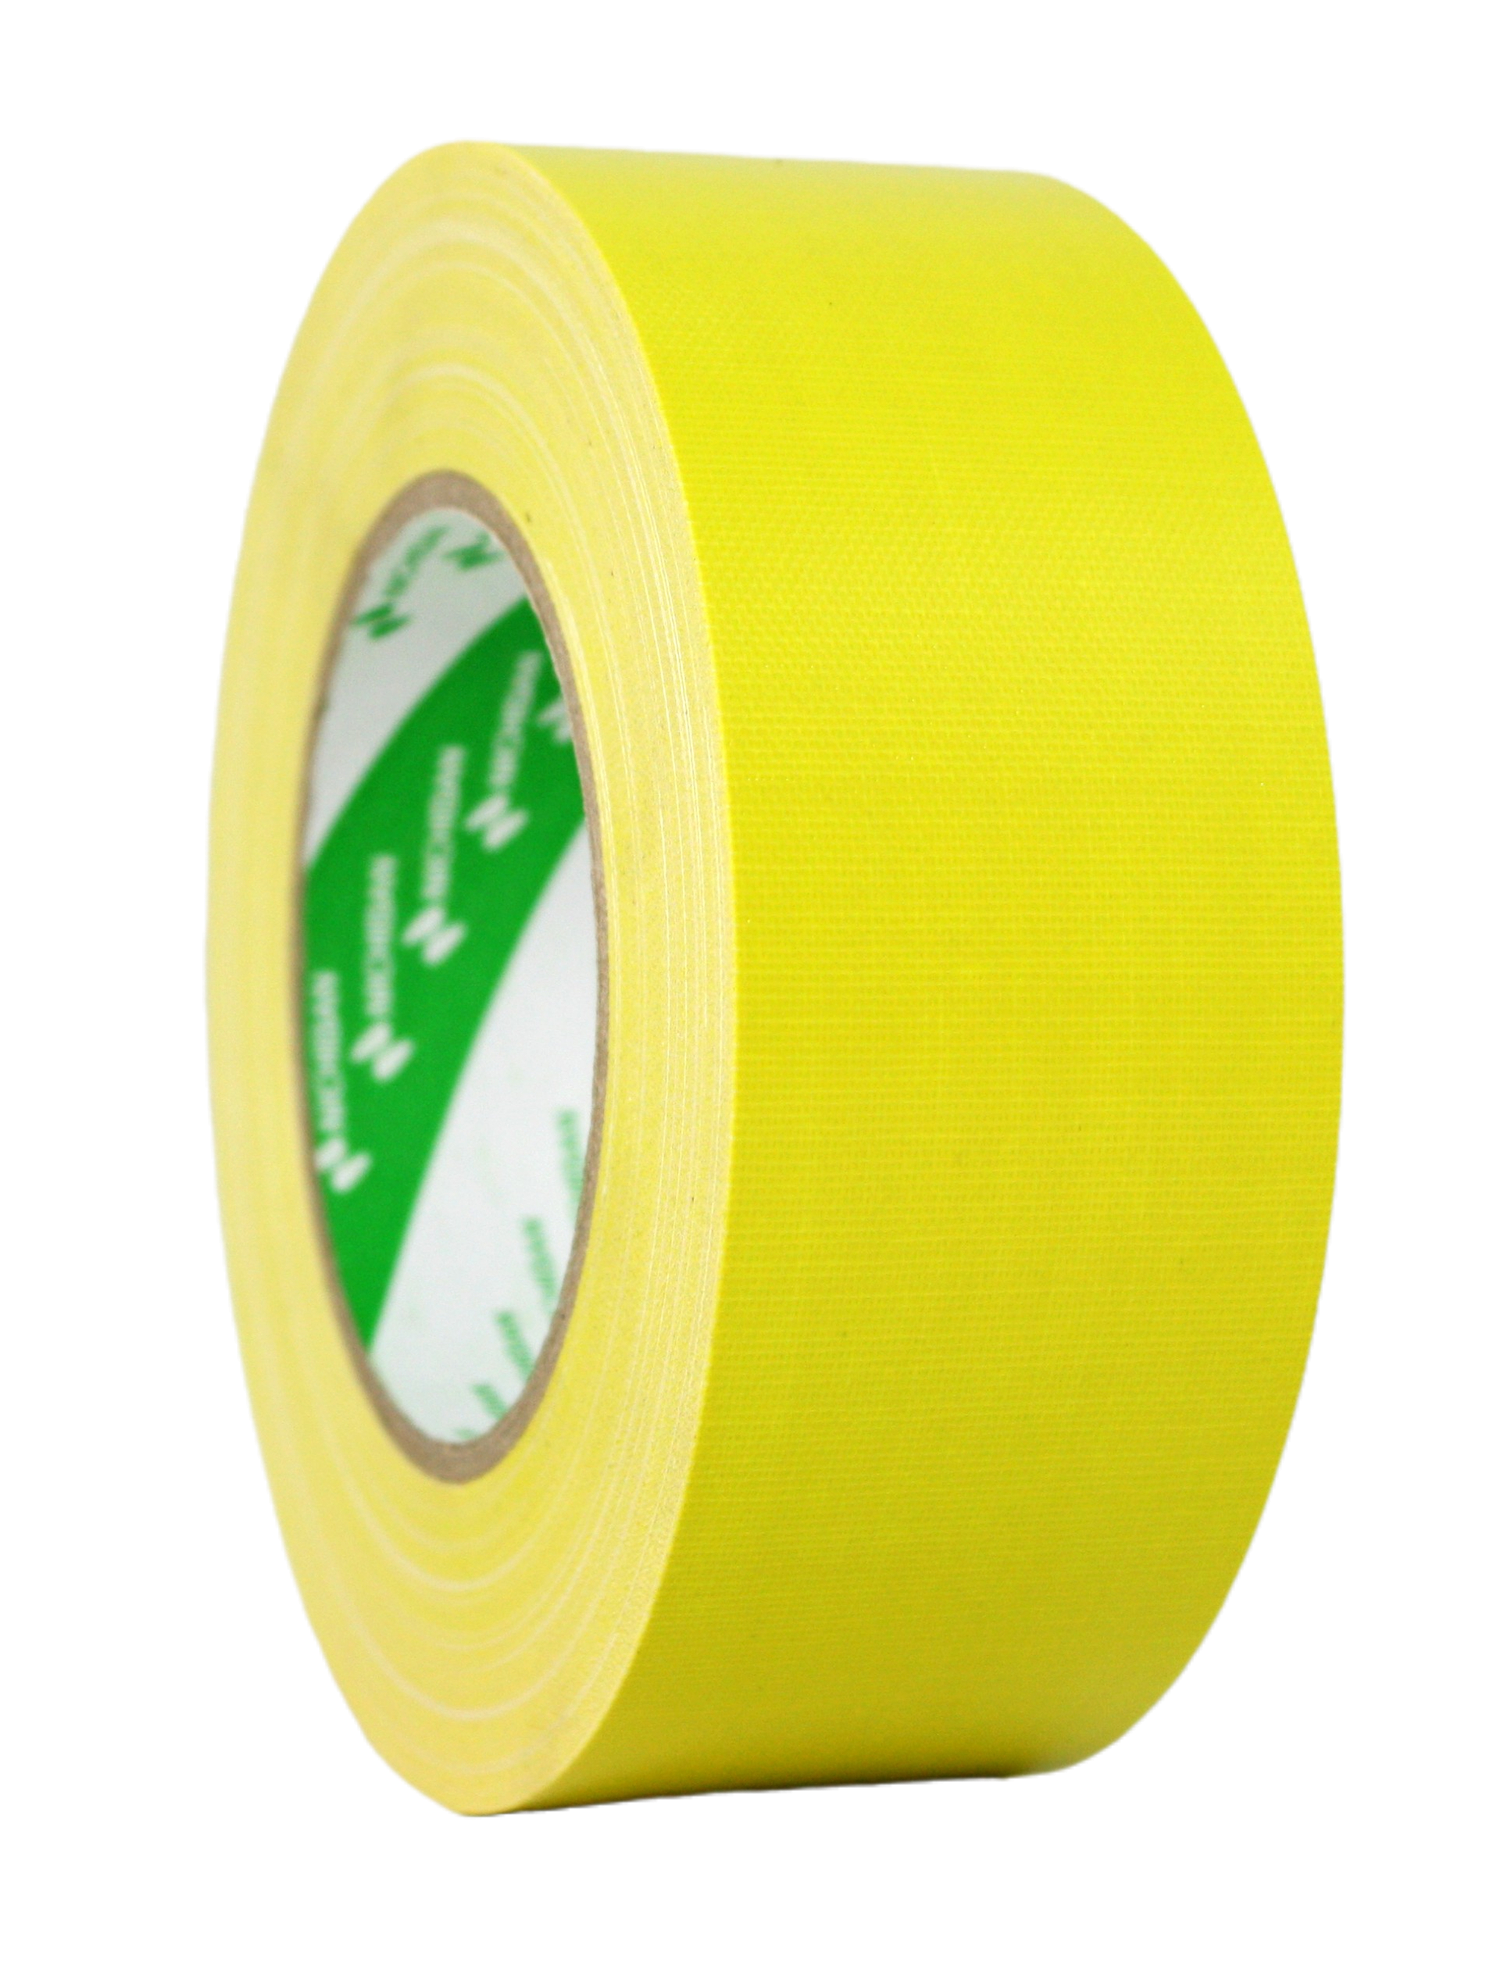 Nichiban Yellow Gaff Tape, 2" roll, side view